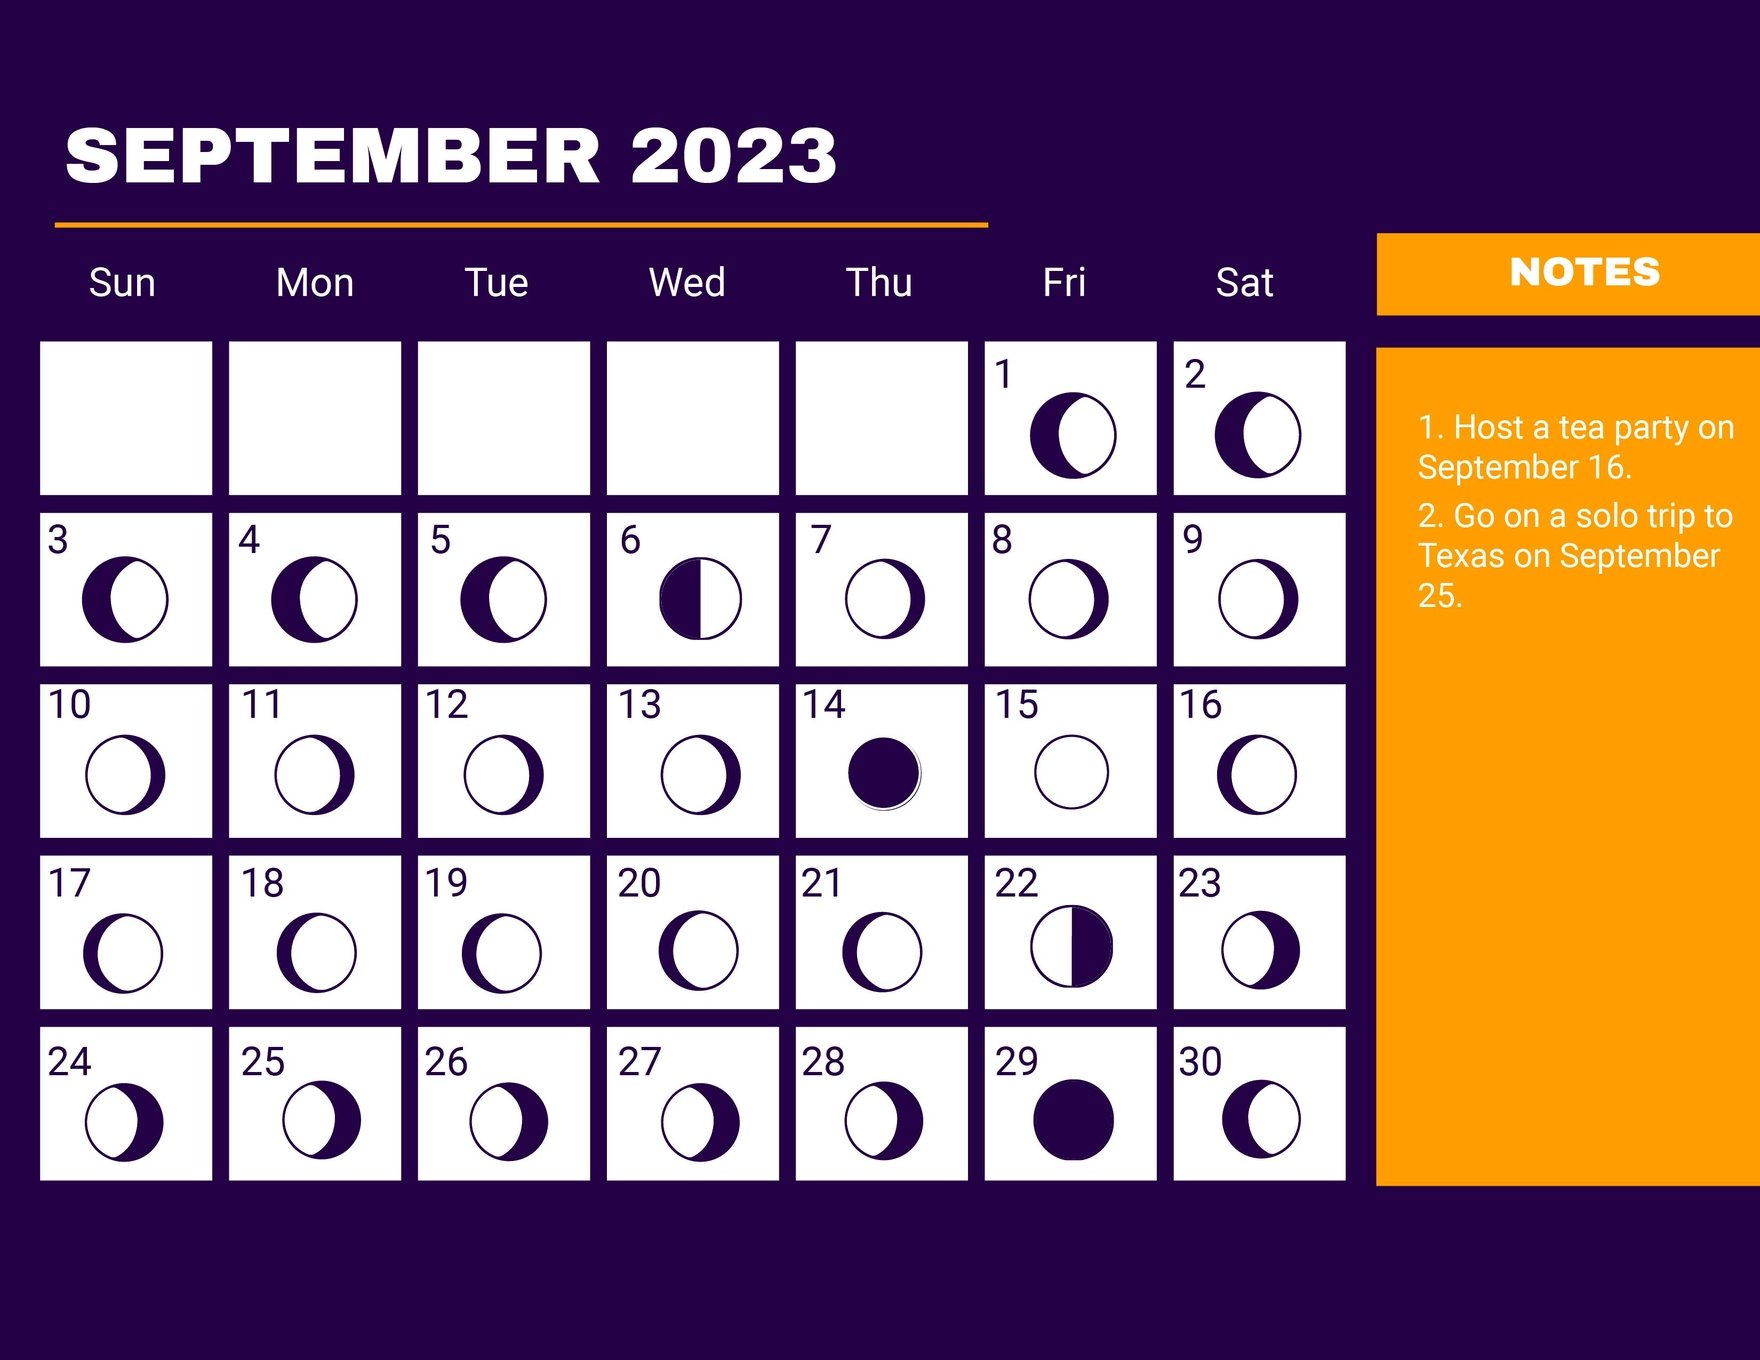 September 2023 Calendar Template With Moon Phases in Illustrator, EPS